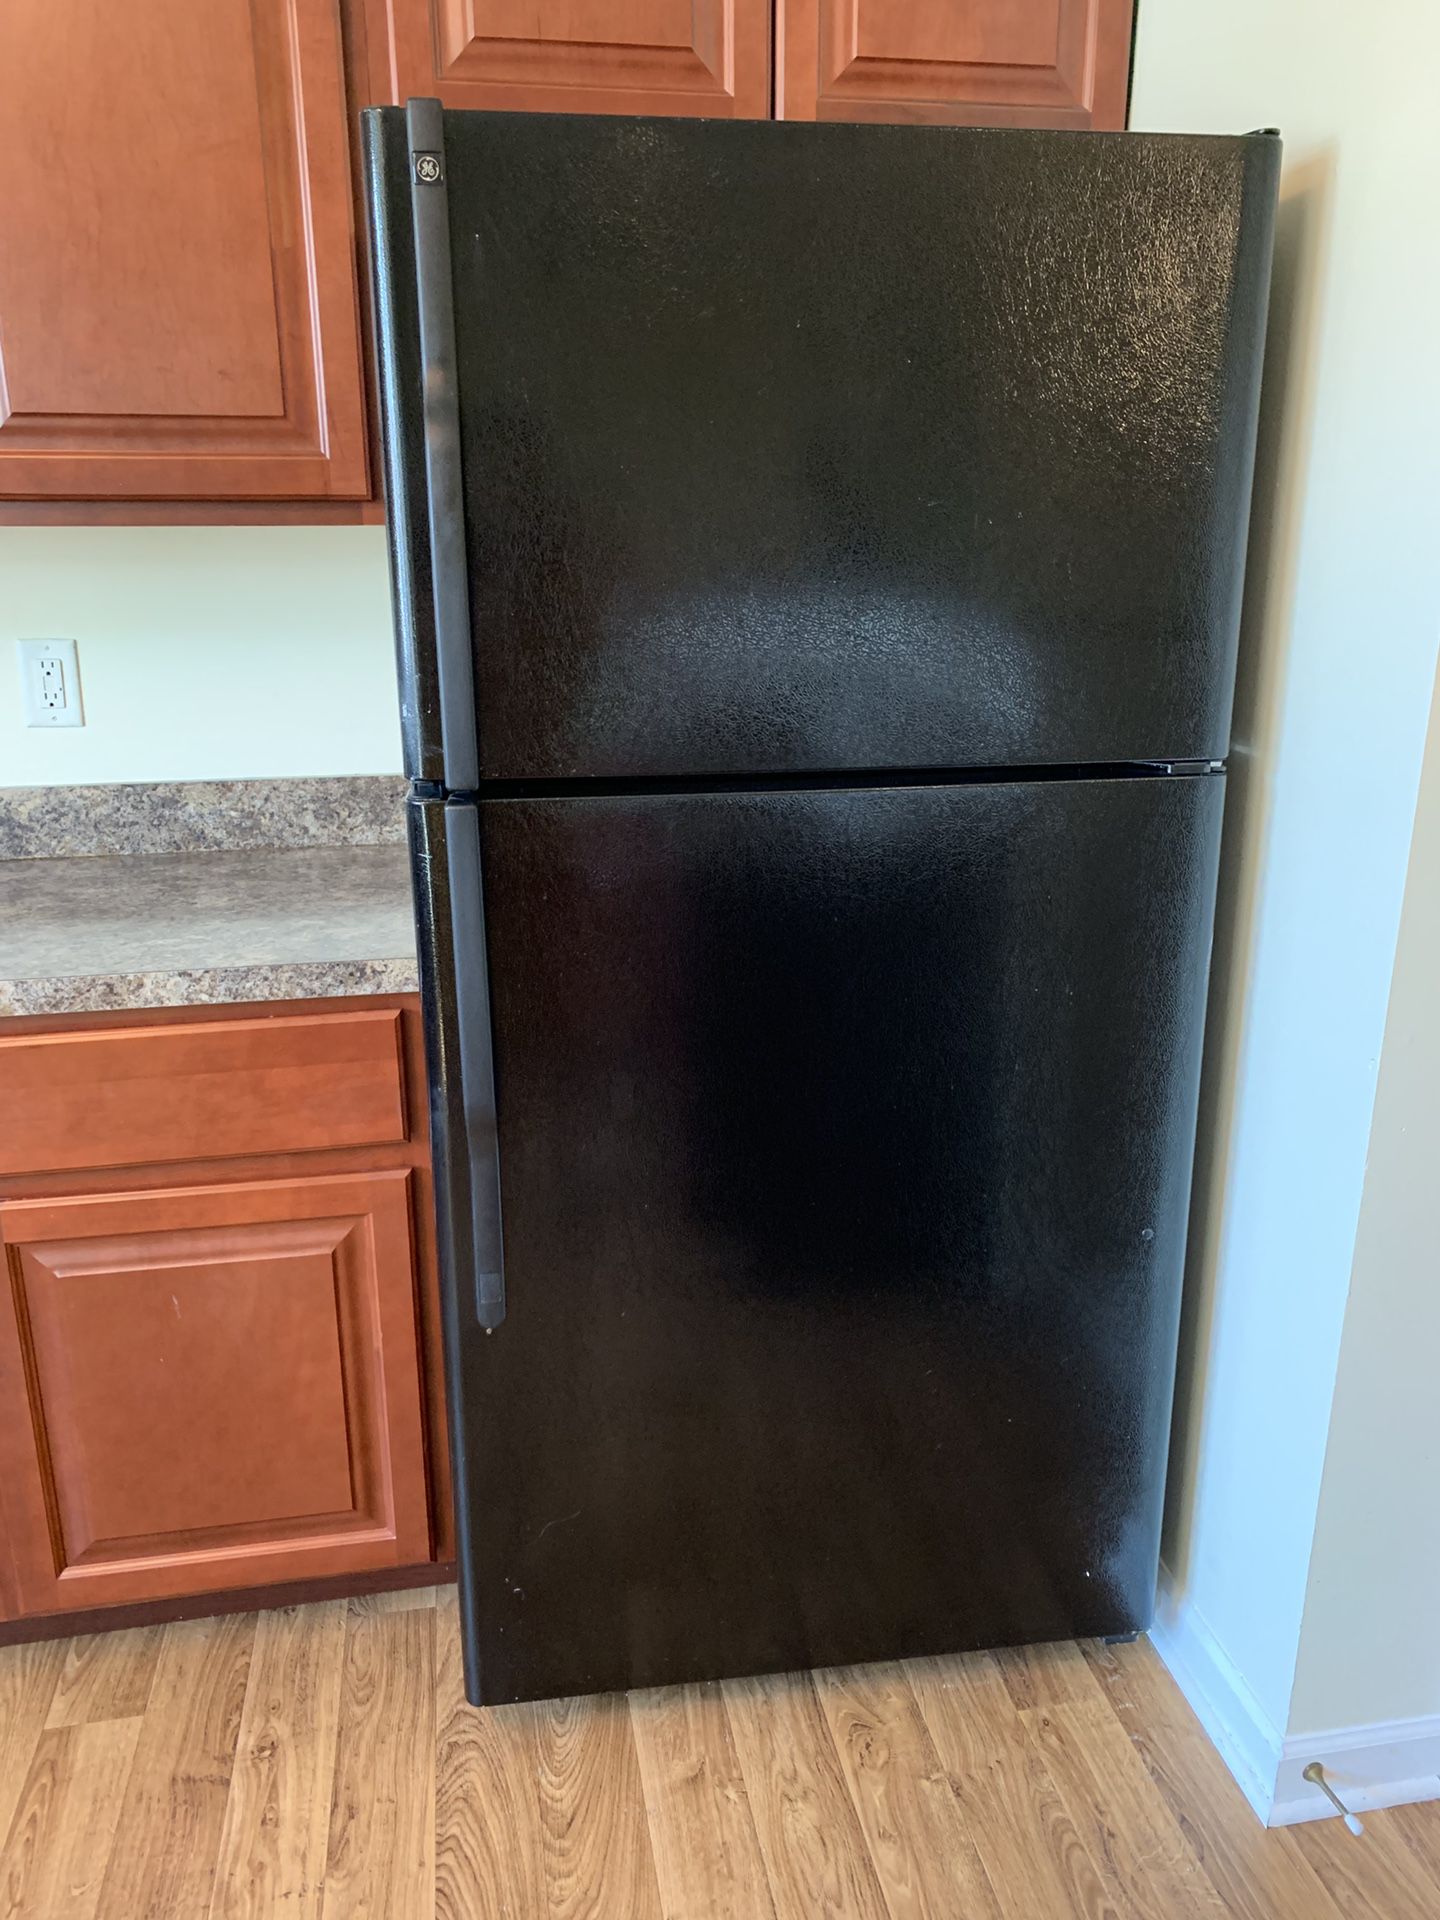 Black Refrigerator with Ice Maker